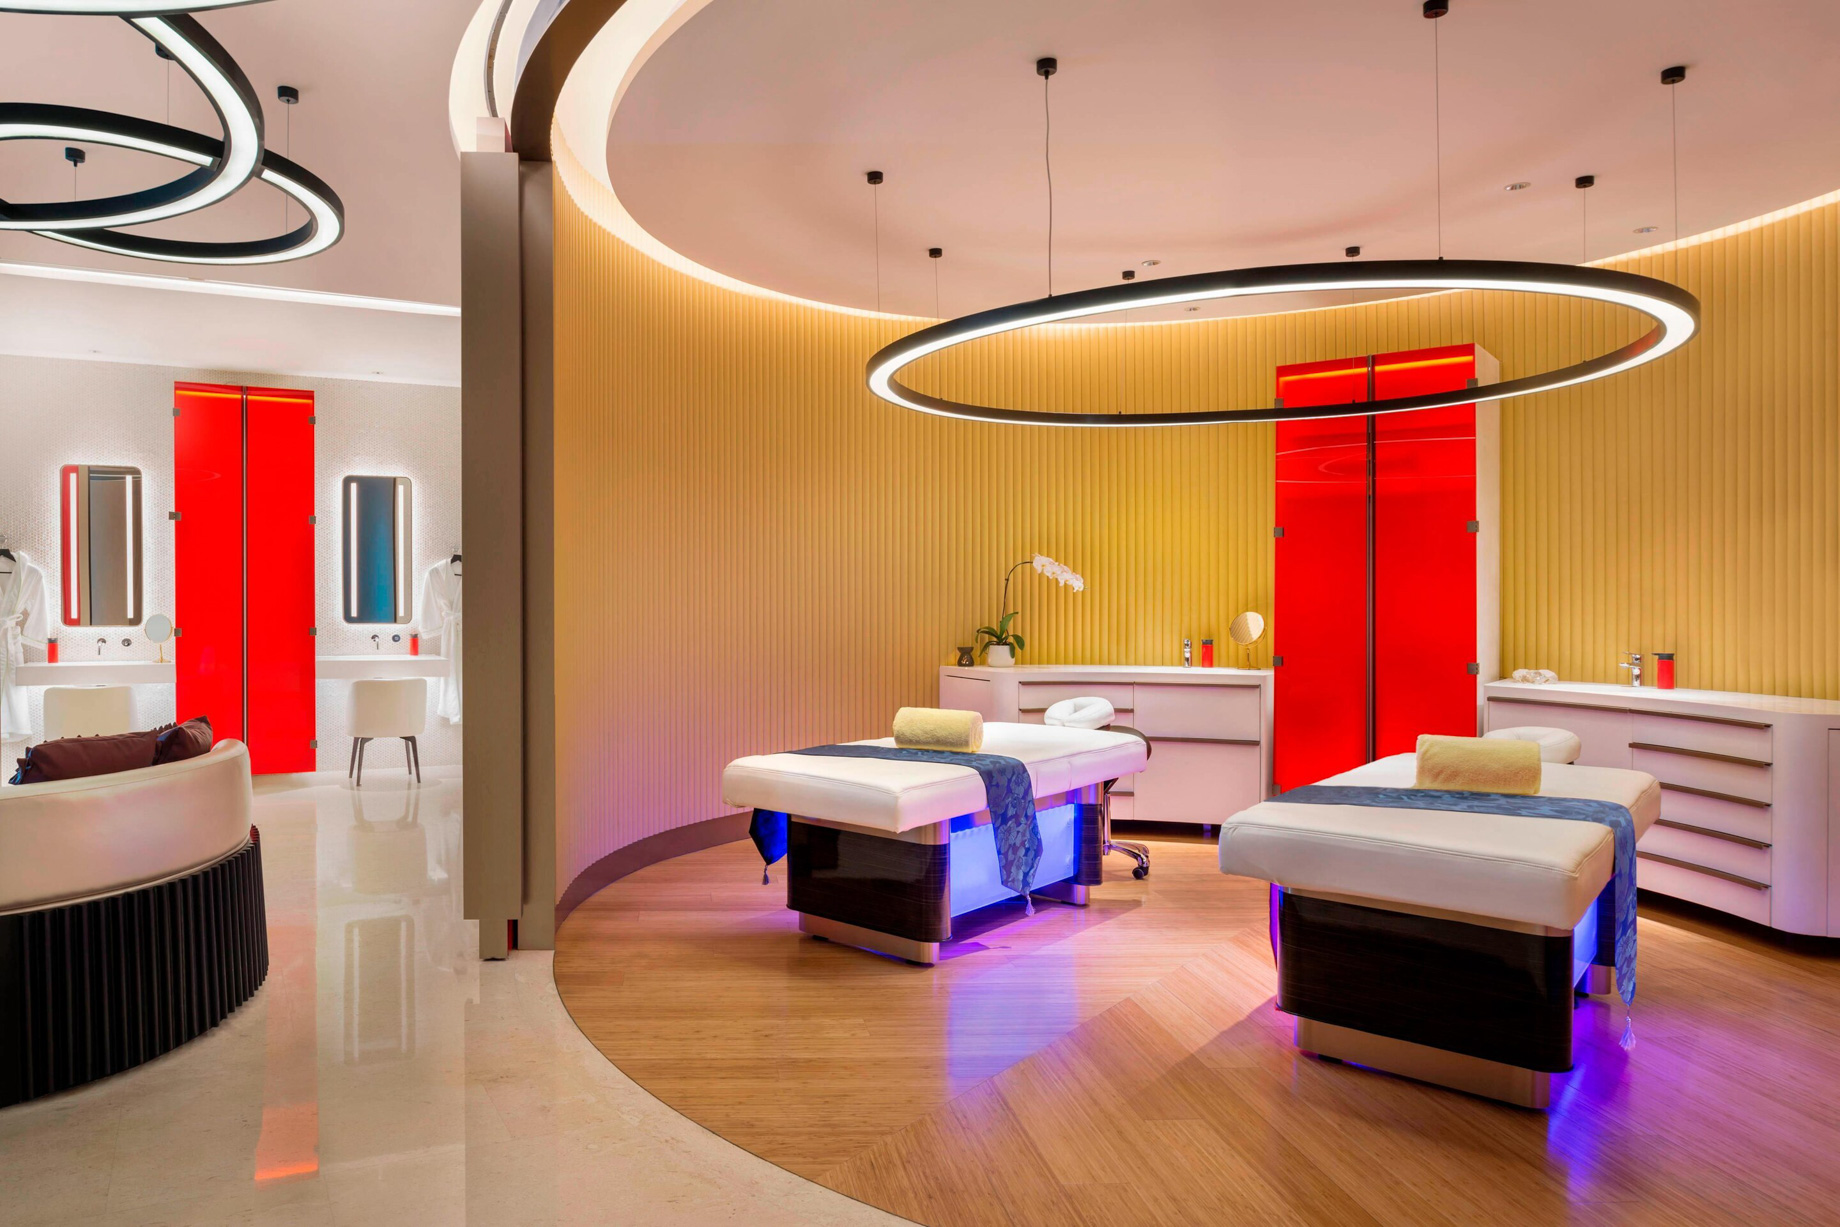 W Suzhou Hotel - Suzhou, China - AWAY Spa Treatment Room